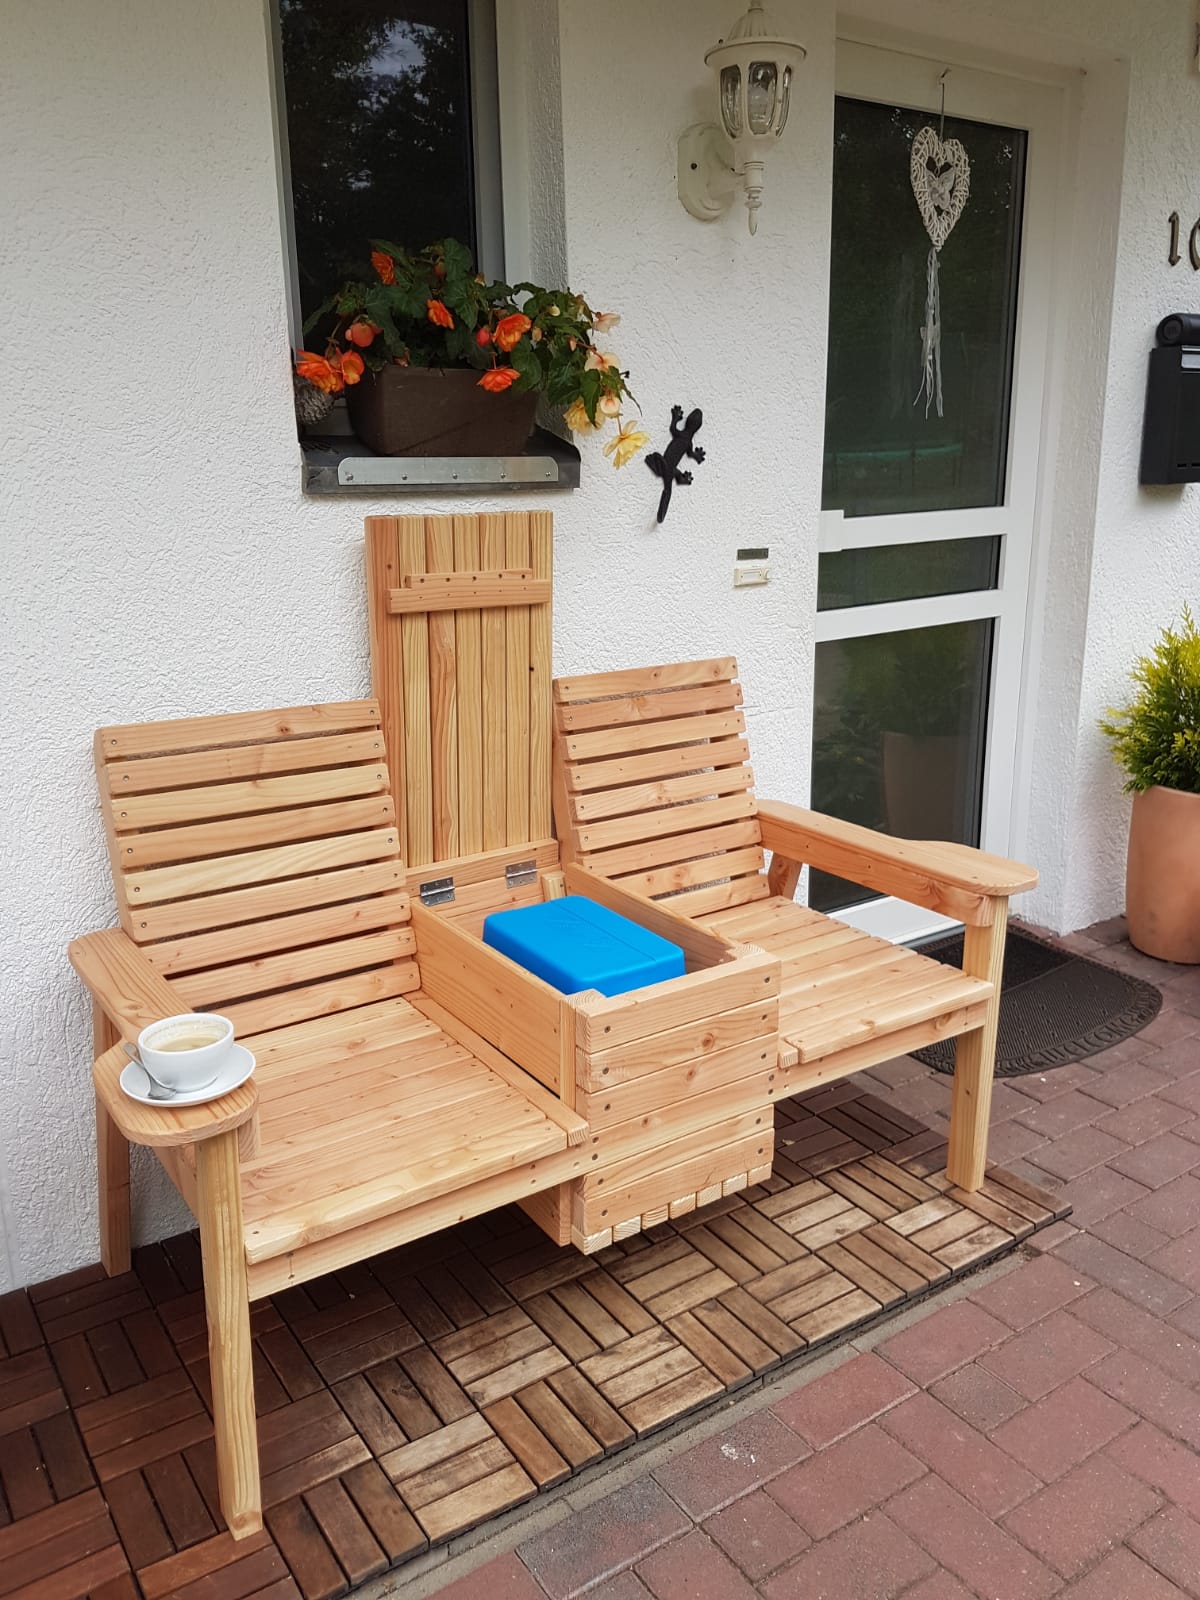 DIY Double Chair Bench with Cooler | MyOutdoorPlans | Free Woodworking